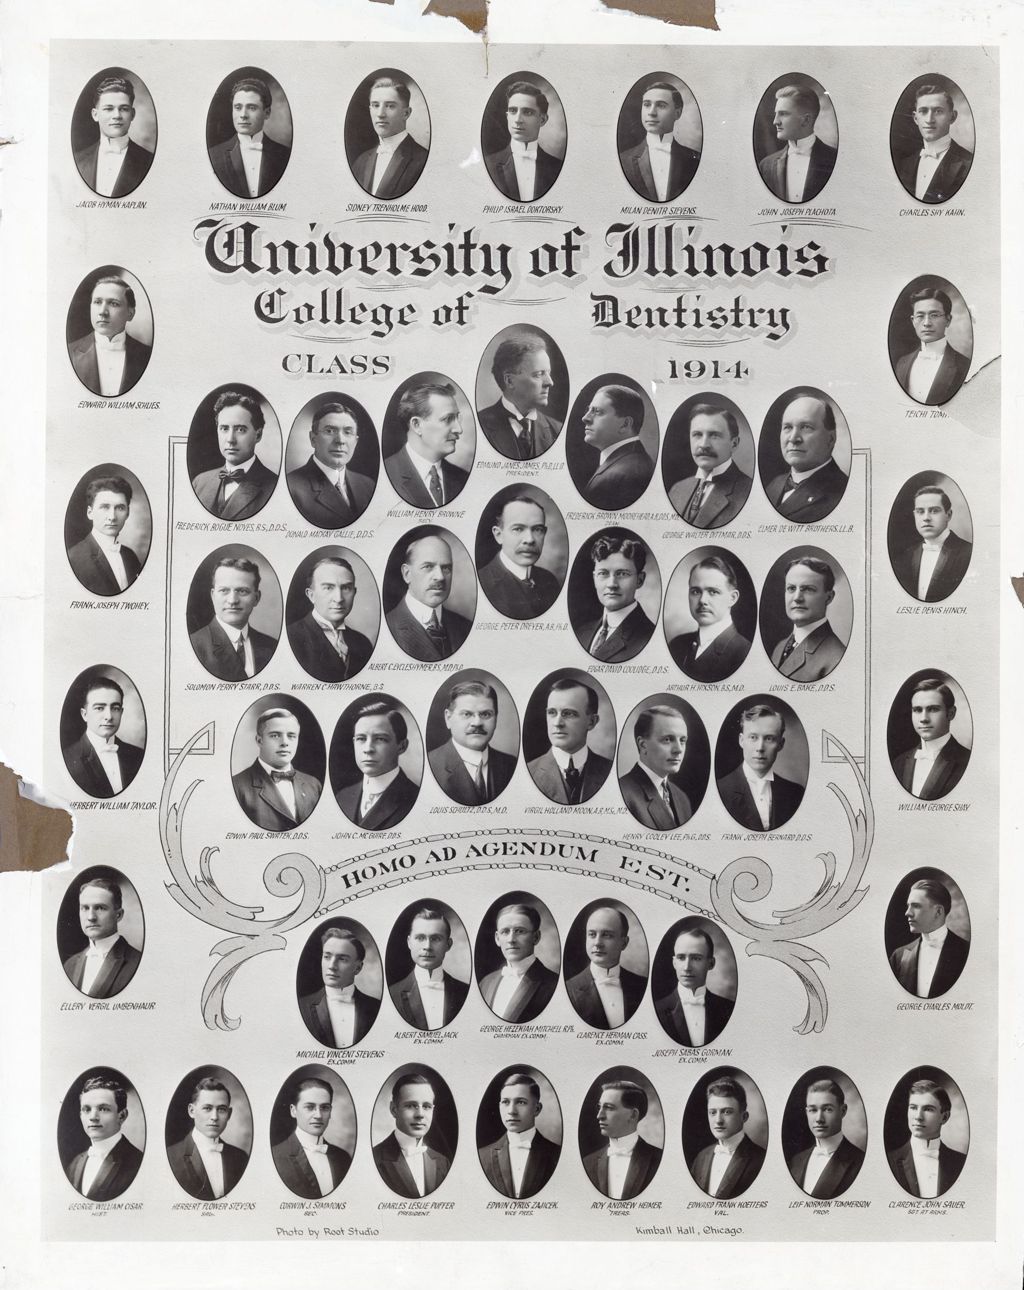 Miniature of 1914 graduating class, University of Illinois College of Dentistry